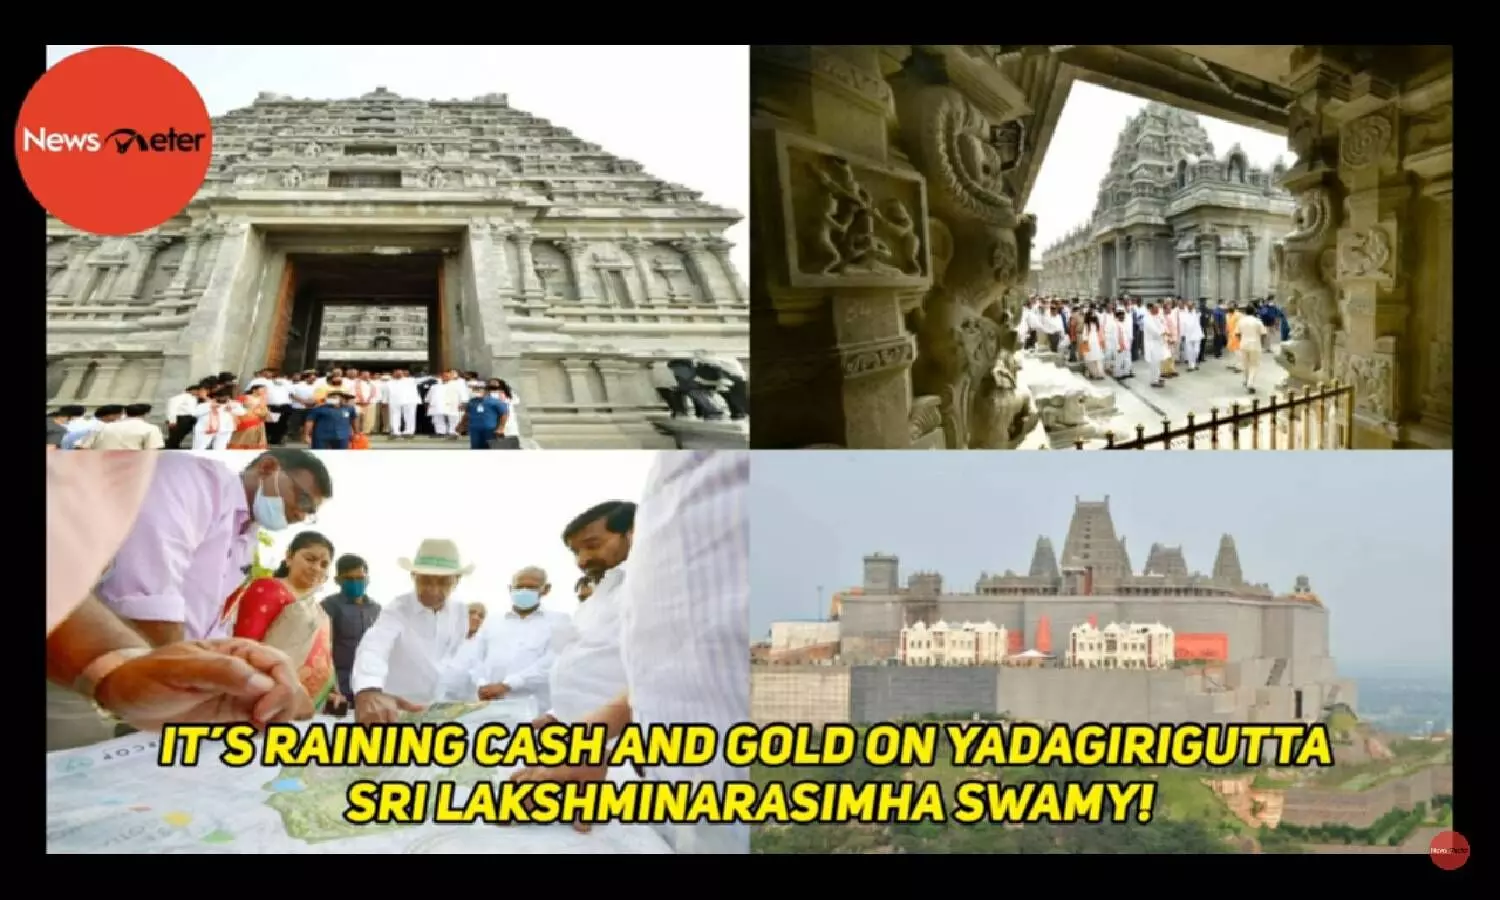 Its raining cash and gold on Yadagirigutta Sri Lakshminarasimha Swamy!